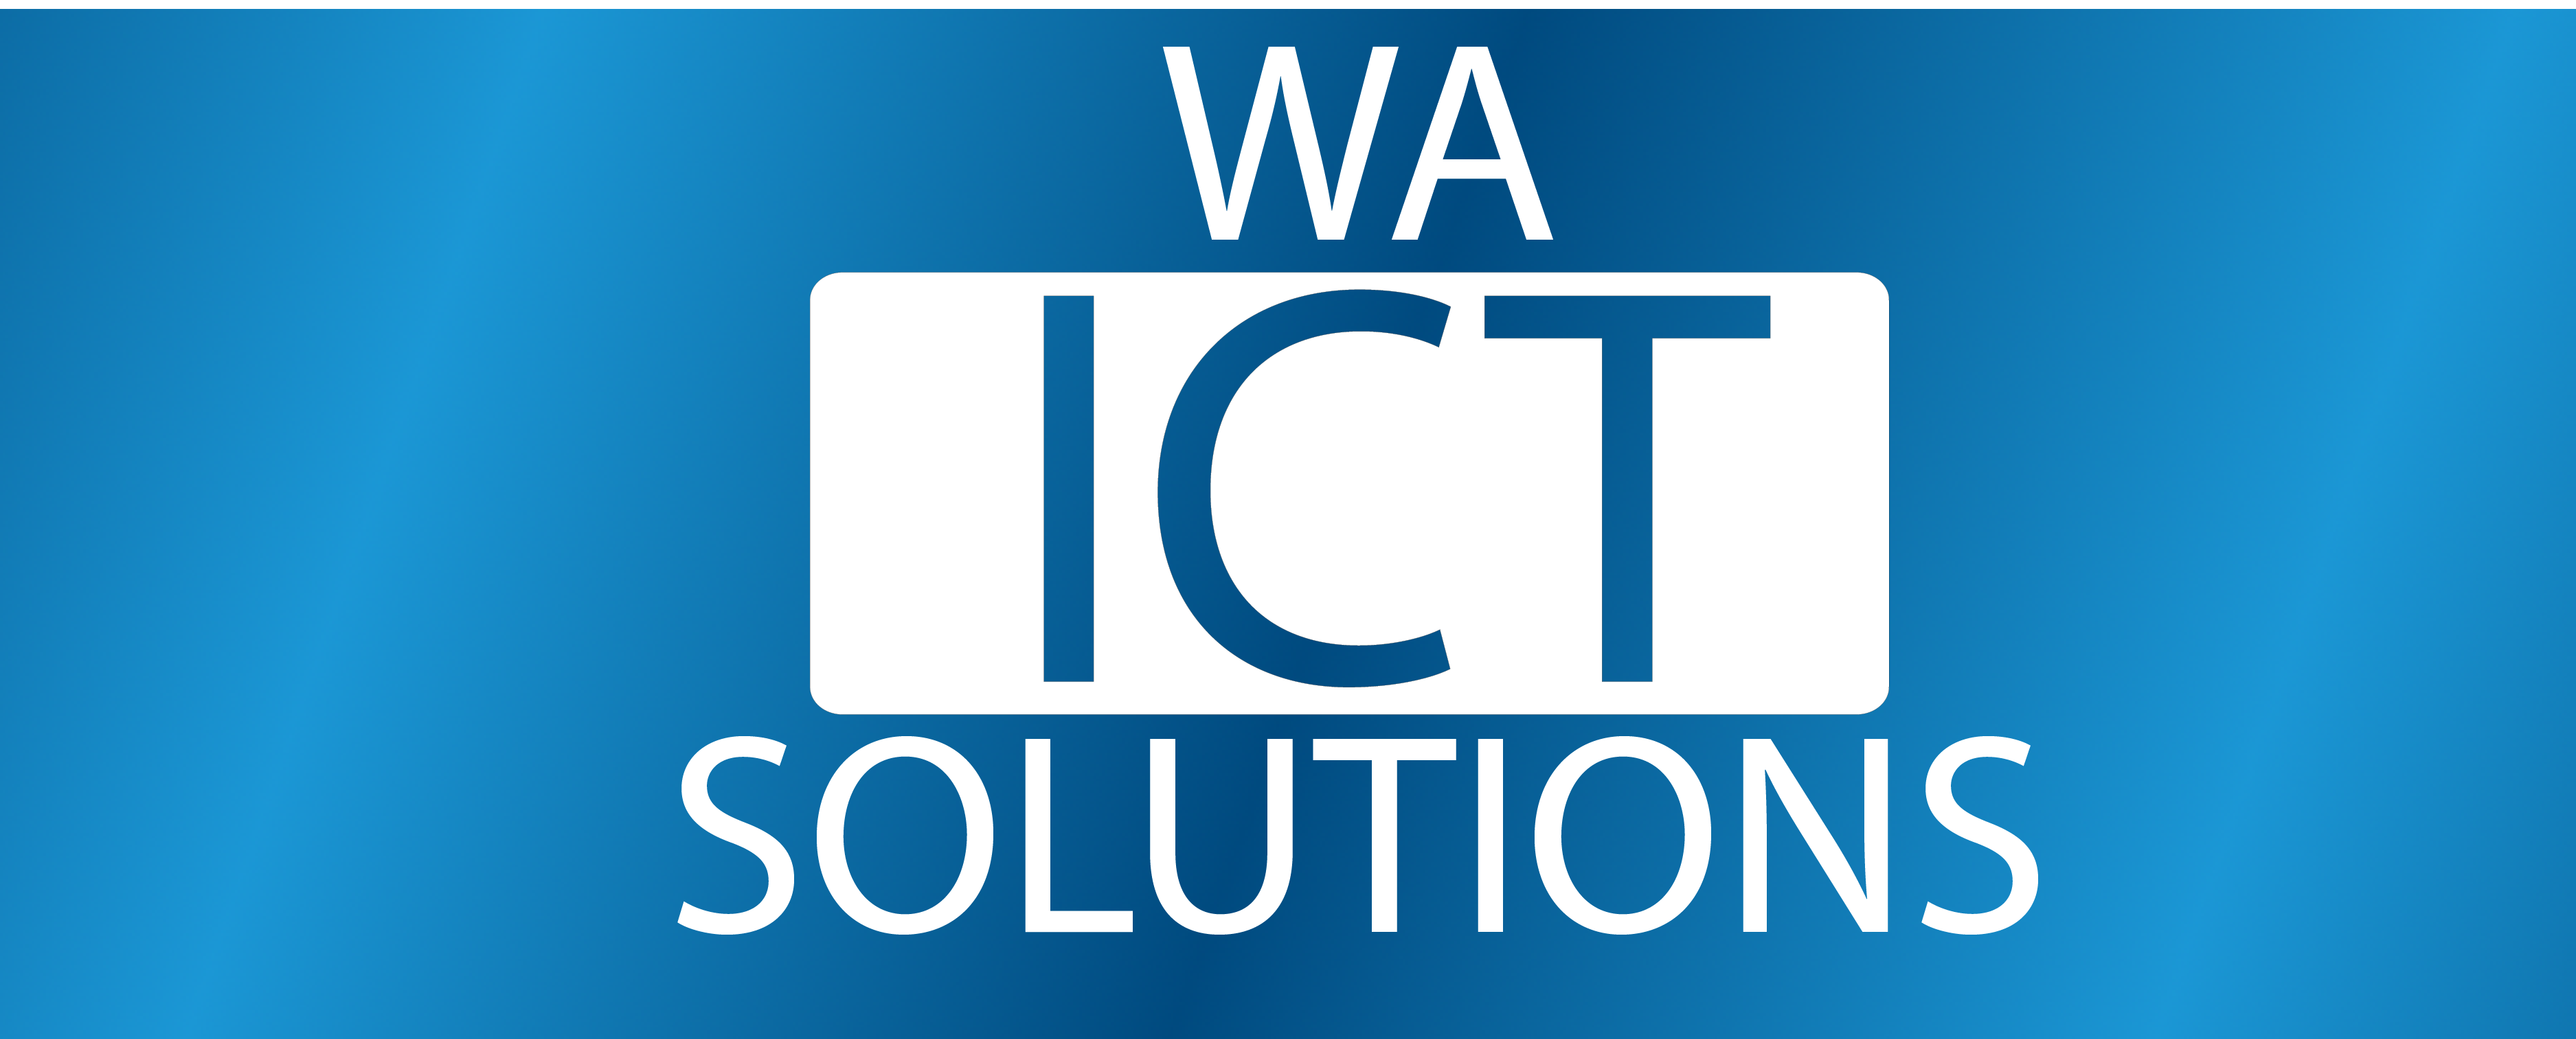 WA ICT SOLUTIONS